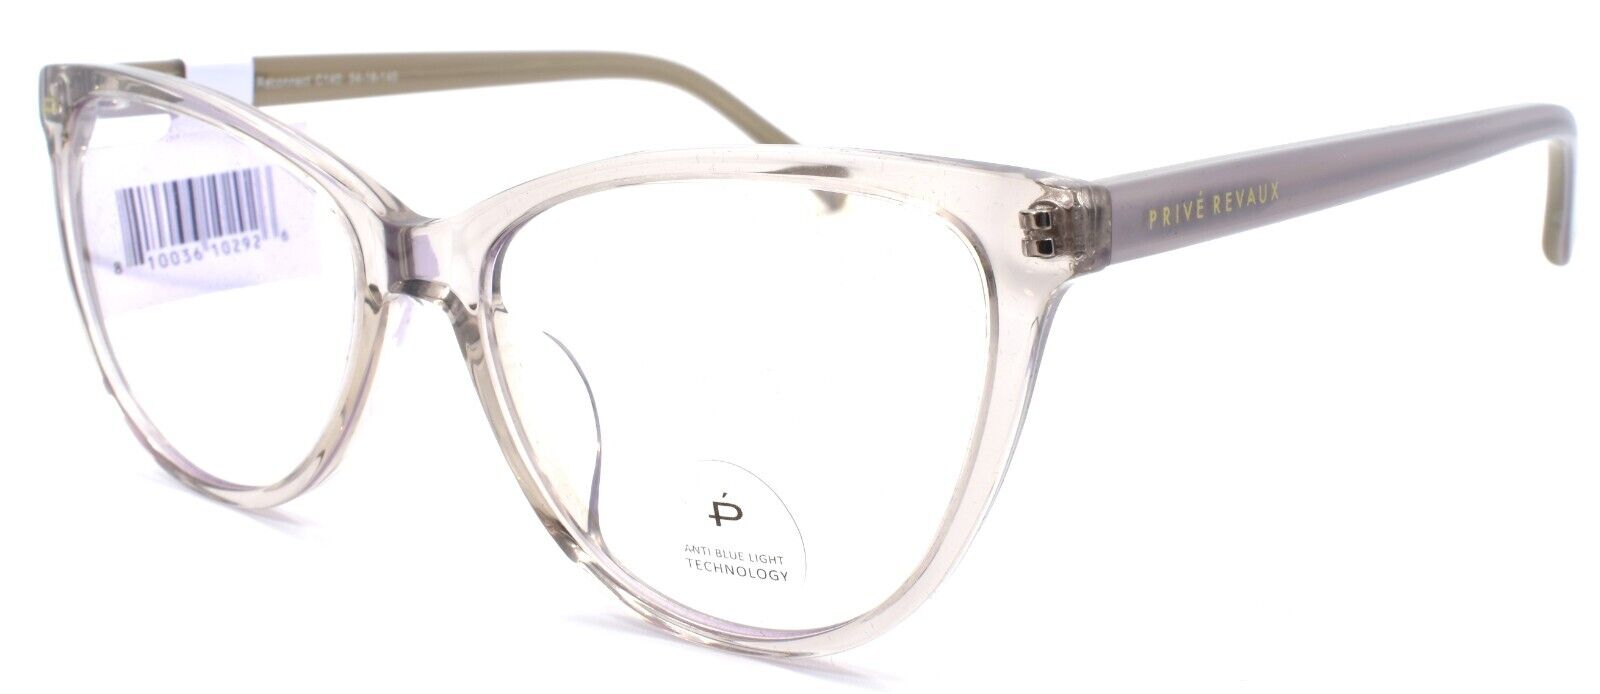 1-Prive Revaux Reconnect C140 Women's Eyeglasses Anti Blue Light RX-ready Grey-810036102926-IKSpecs